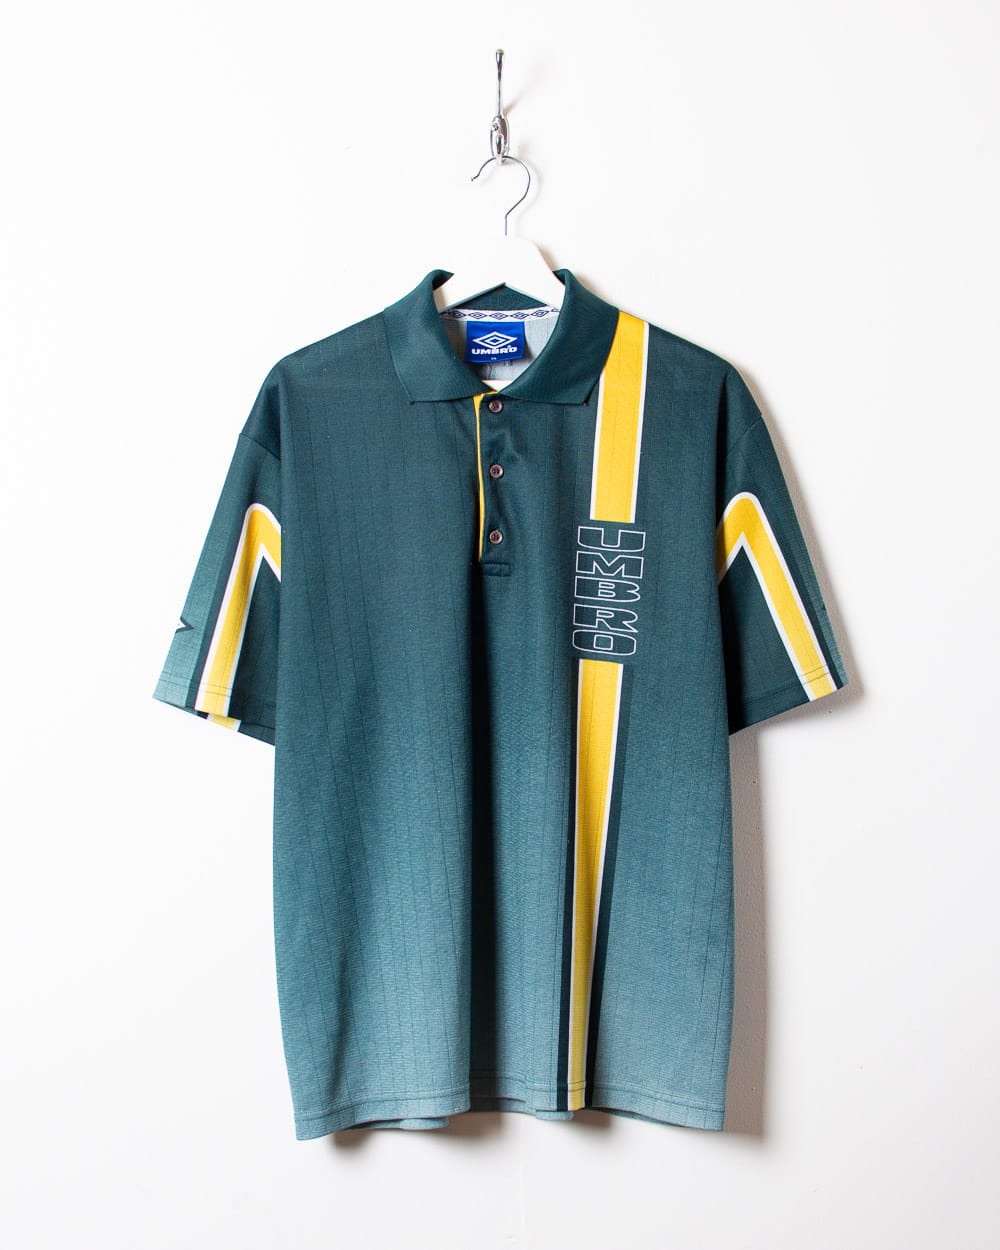 Green Umbro Polo Shirt - X-Large